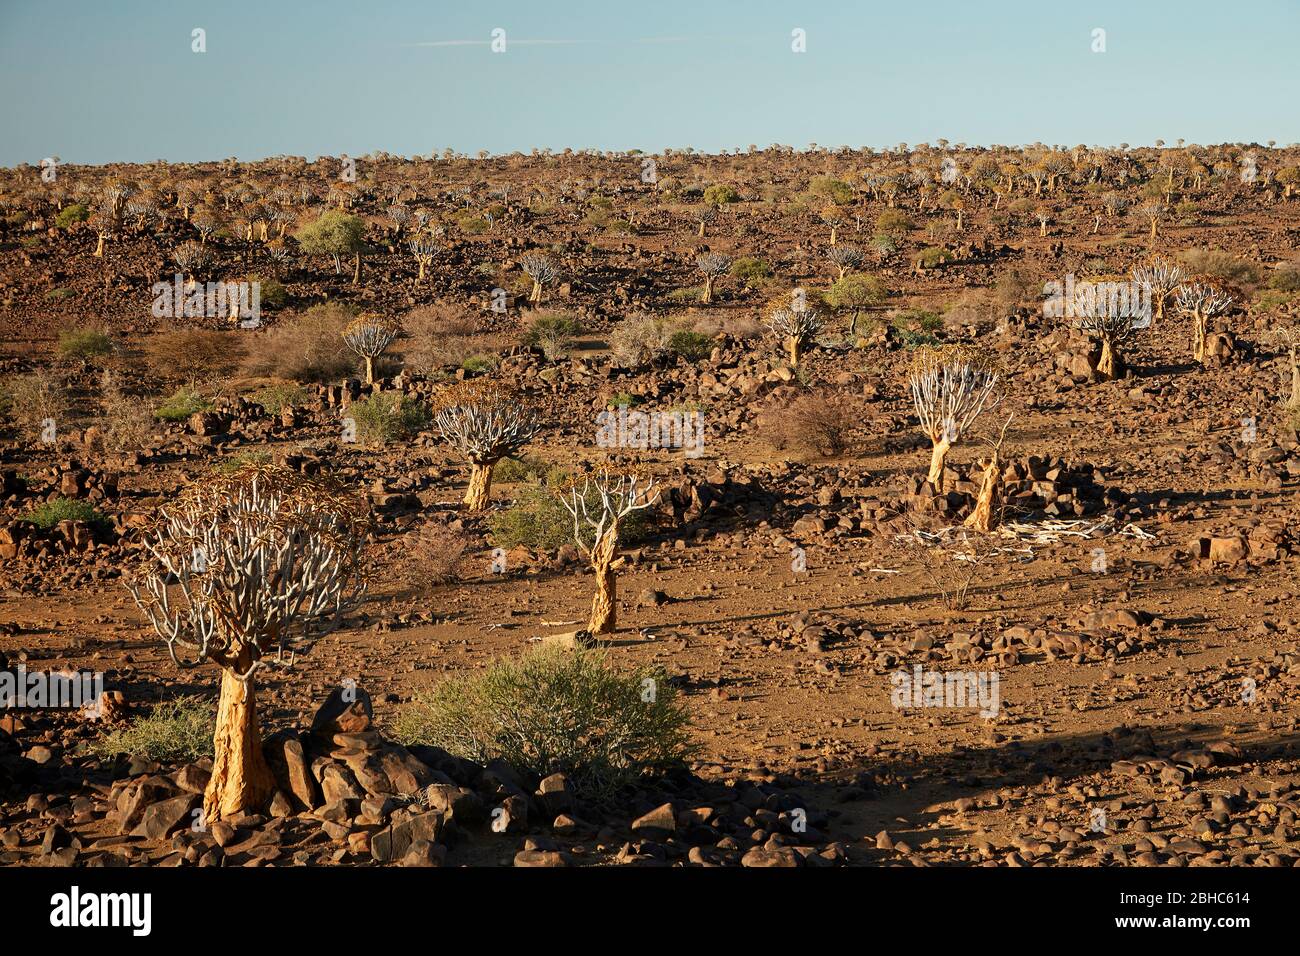 Kokerboom or Quiver Trees (Aloe dichotoma), Mesosaurus Fossil Camp, near Keetmanshoop, Namibia, Africa Stock Photo